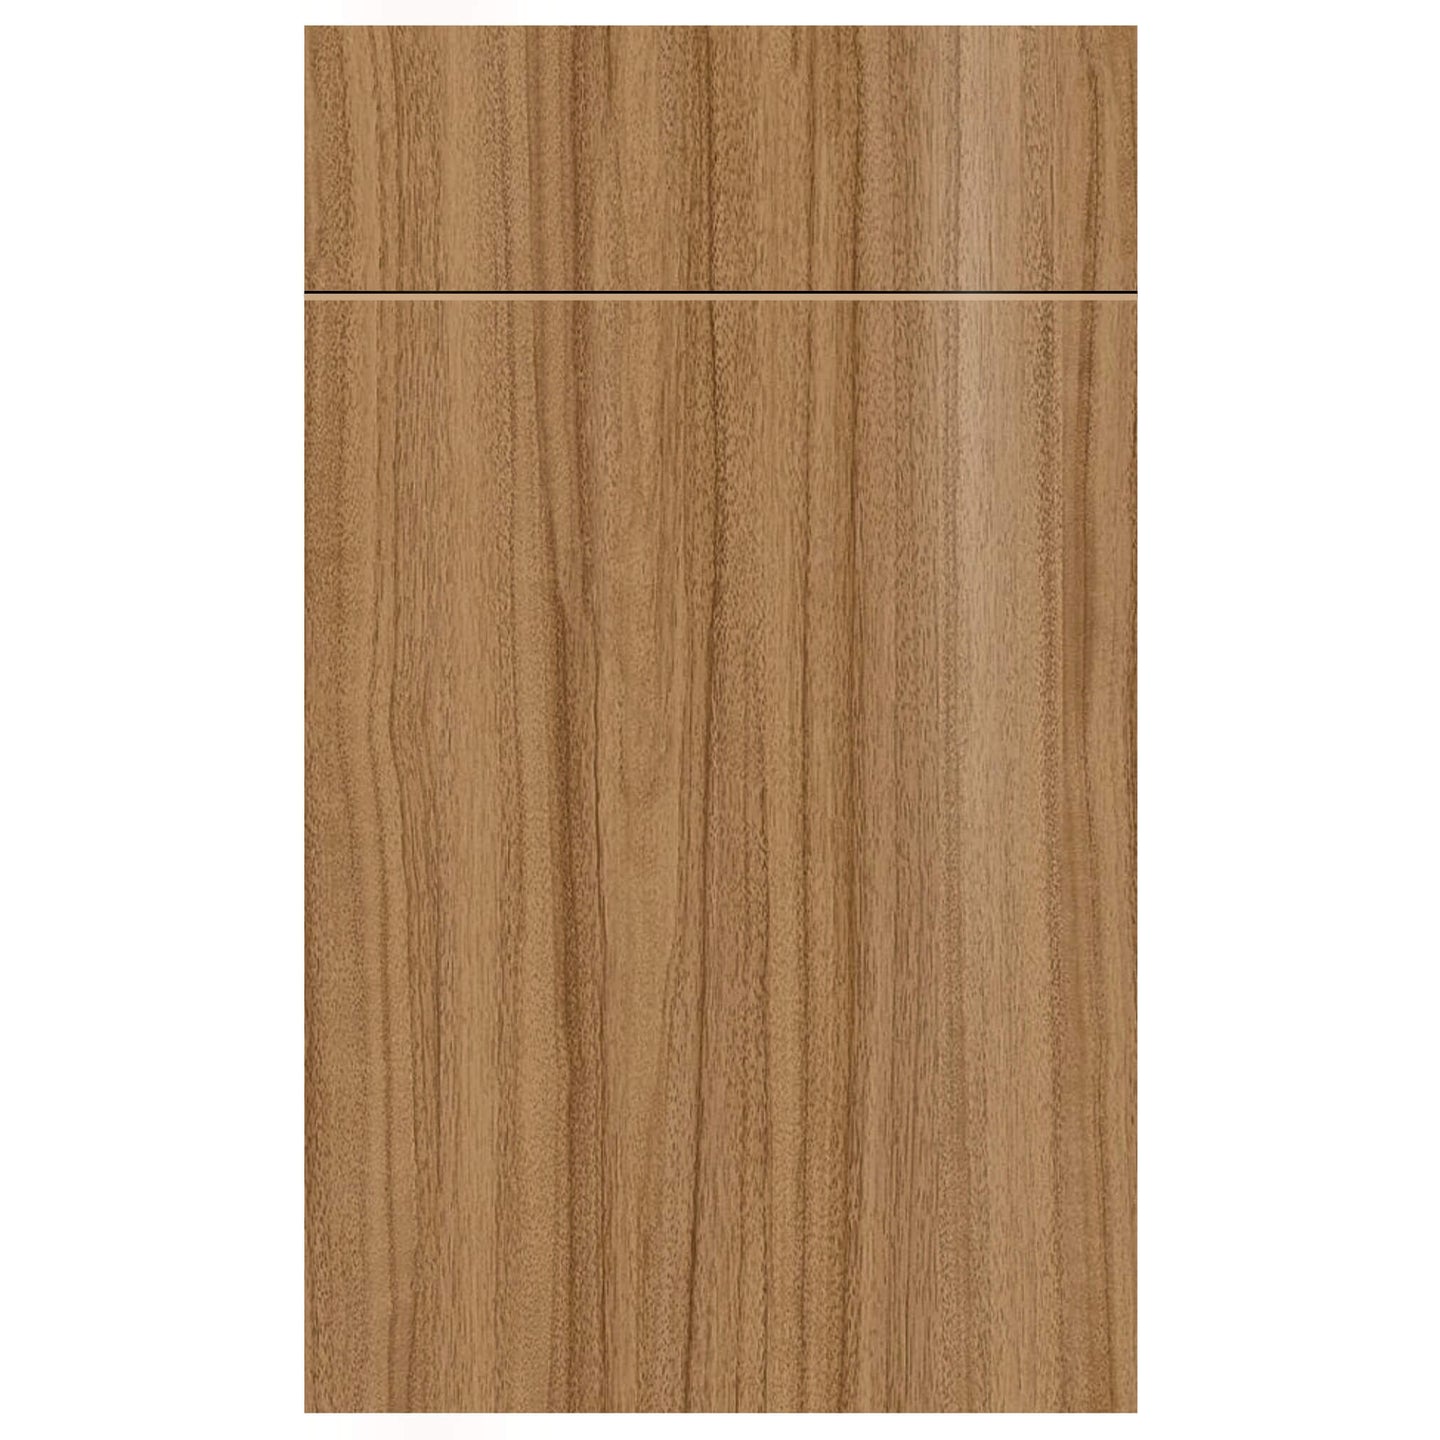 Natural Wood HG Panel Door | Wood Grains High Gloss